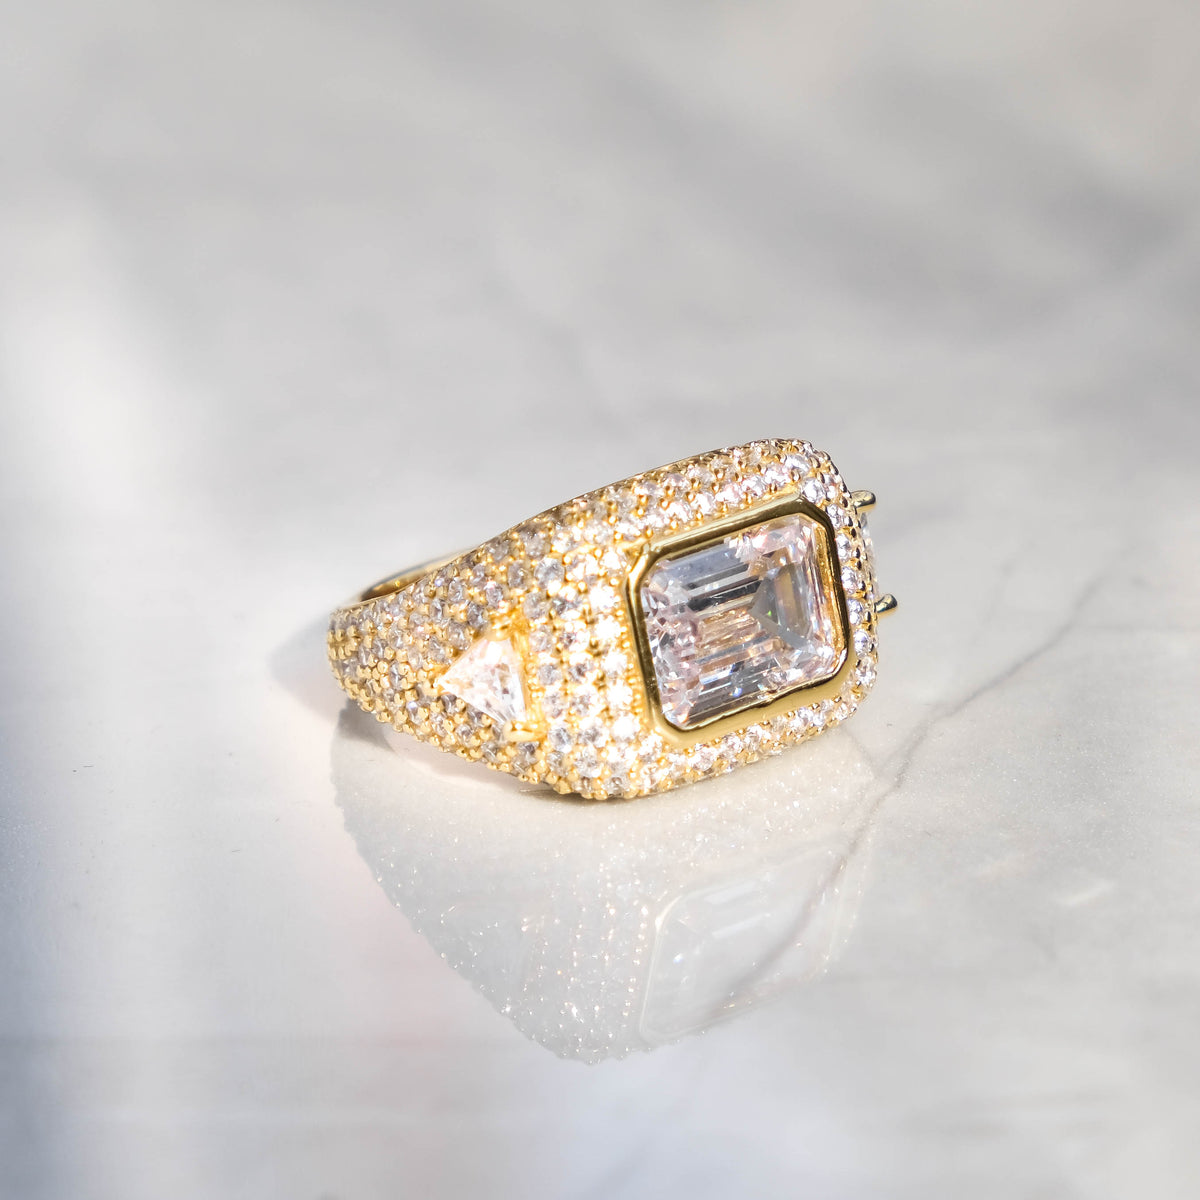 Emerald Cluster Ring 18k Gold - 6IX ICE